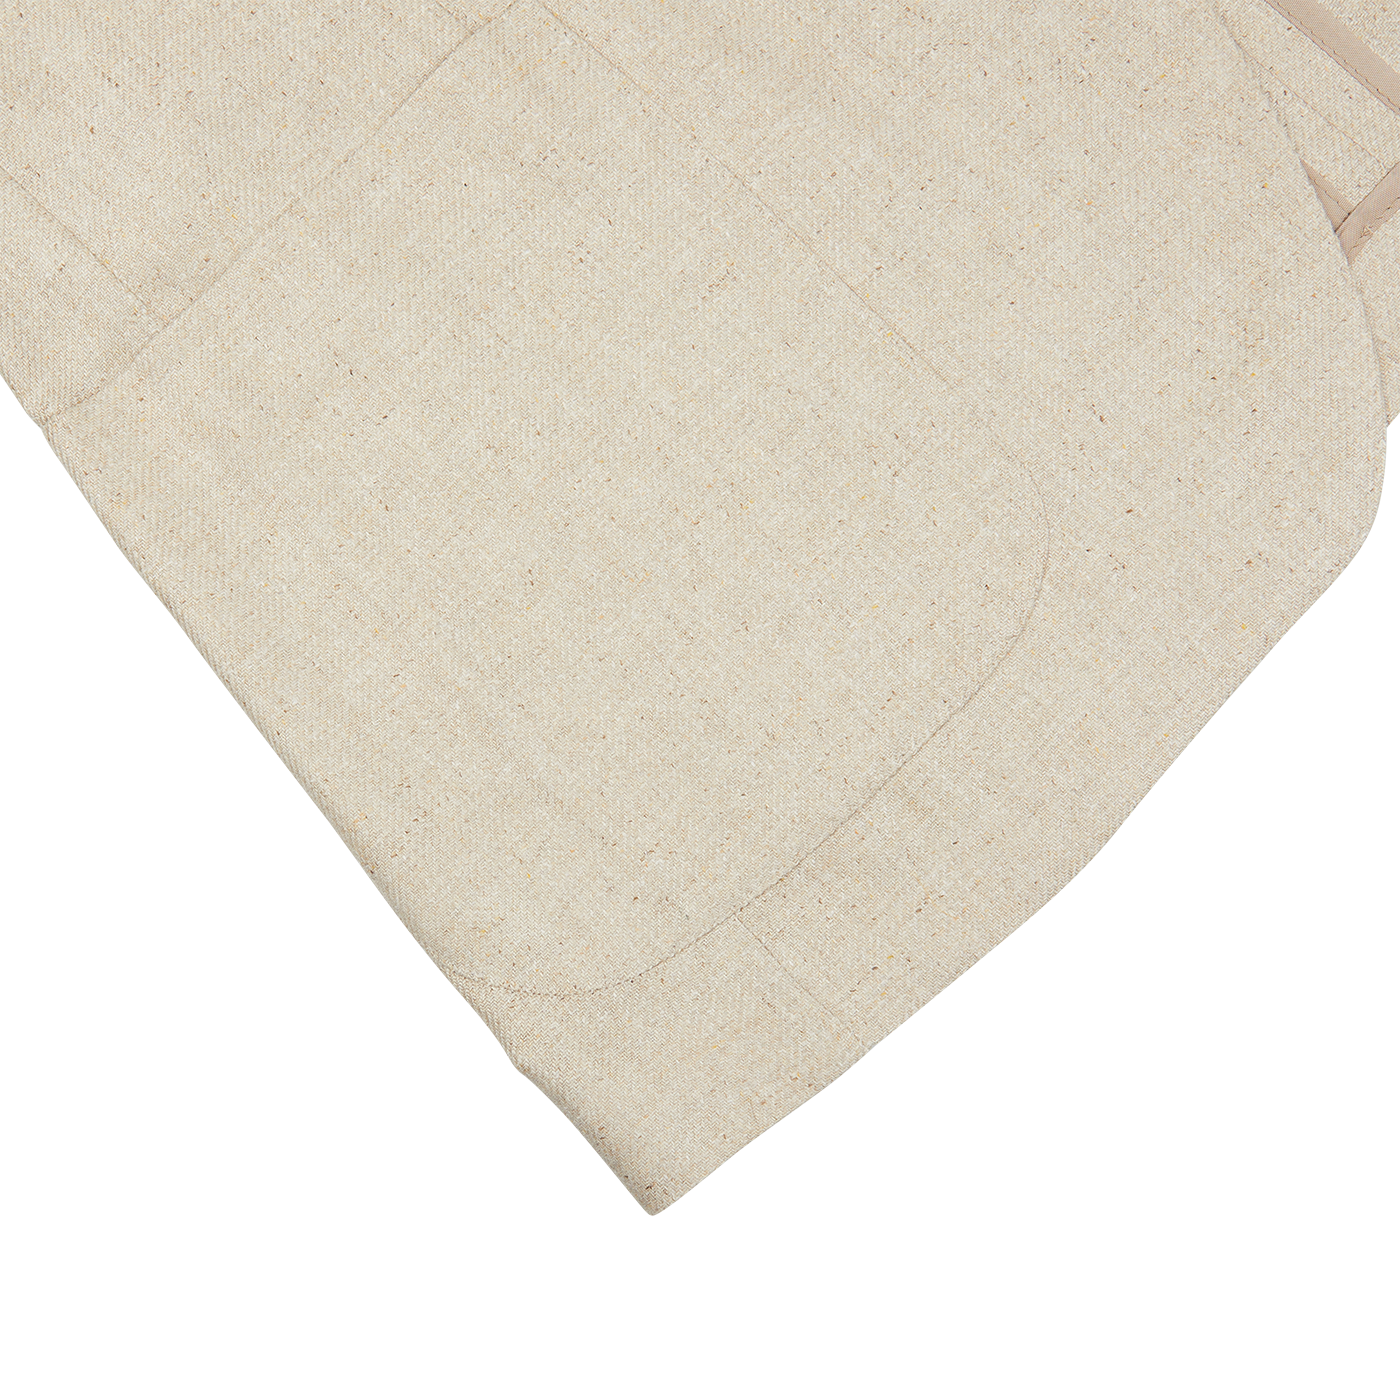 A beige Melange Silk Twill Vesuvio Blazer with a pocket, perfect for holding small essentials by Tagliatore.